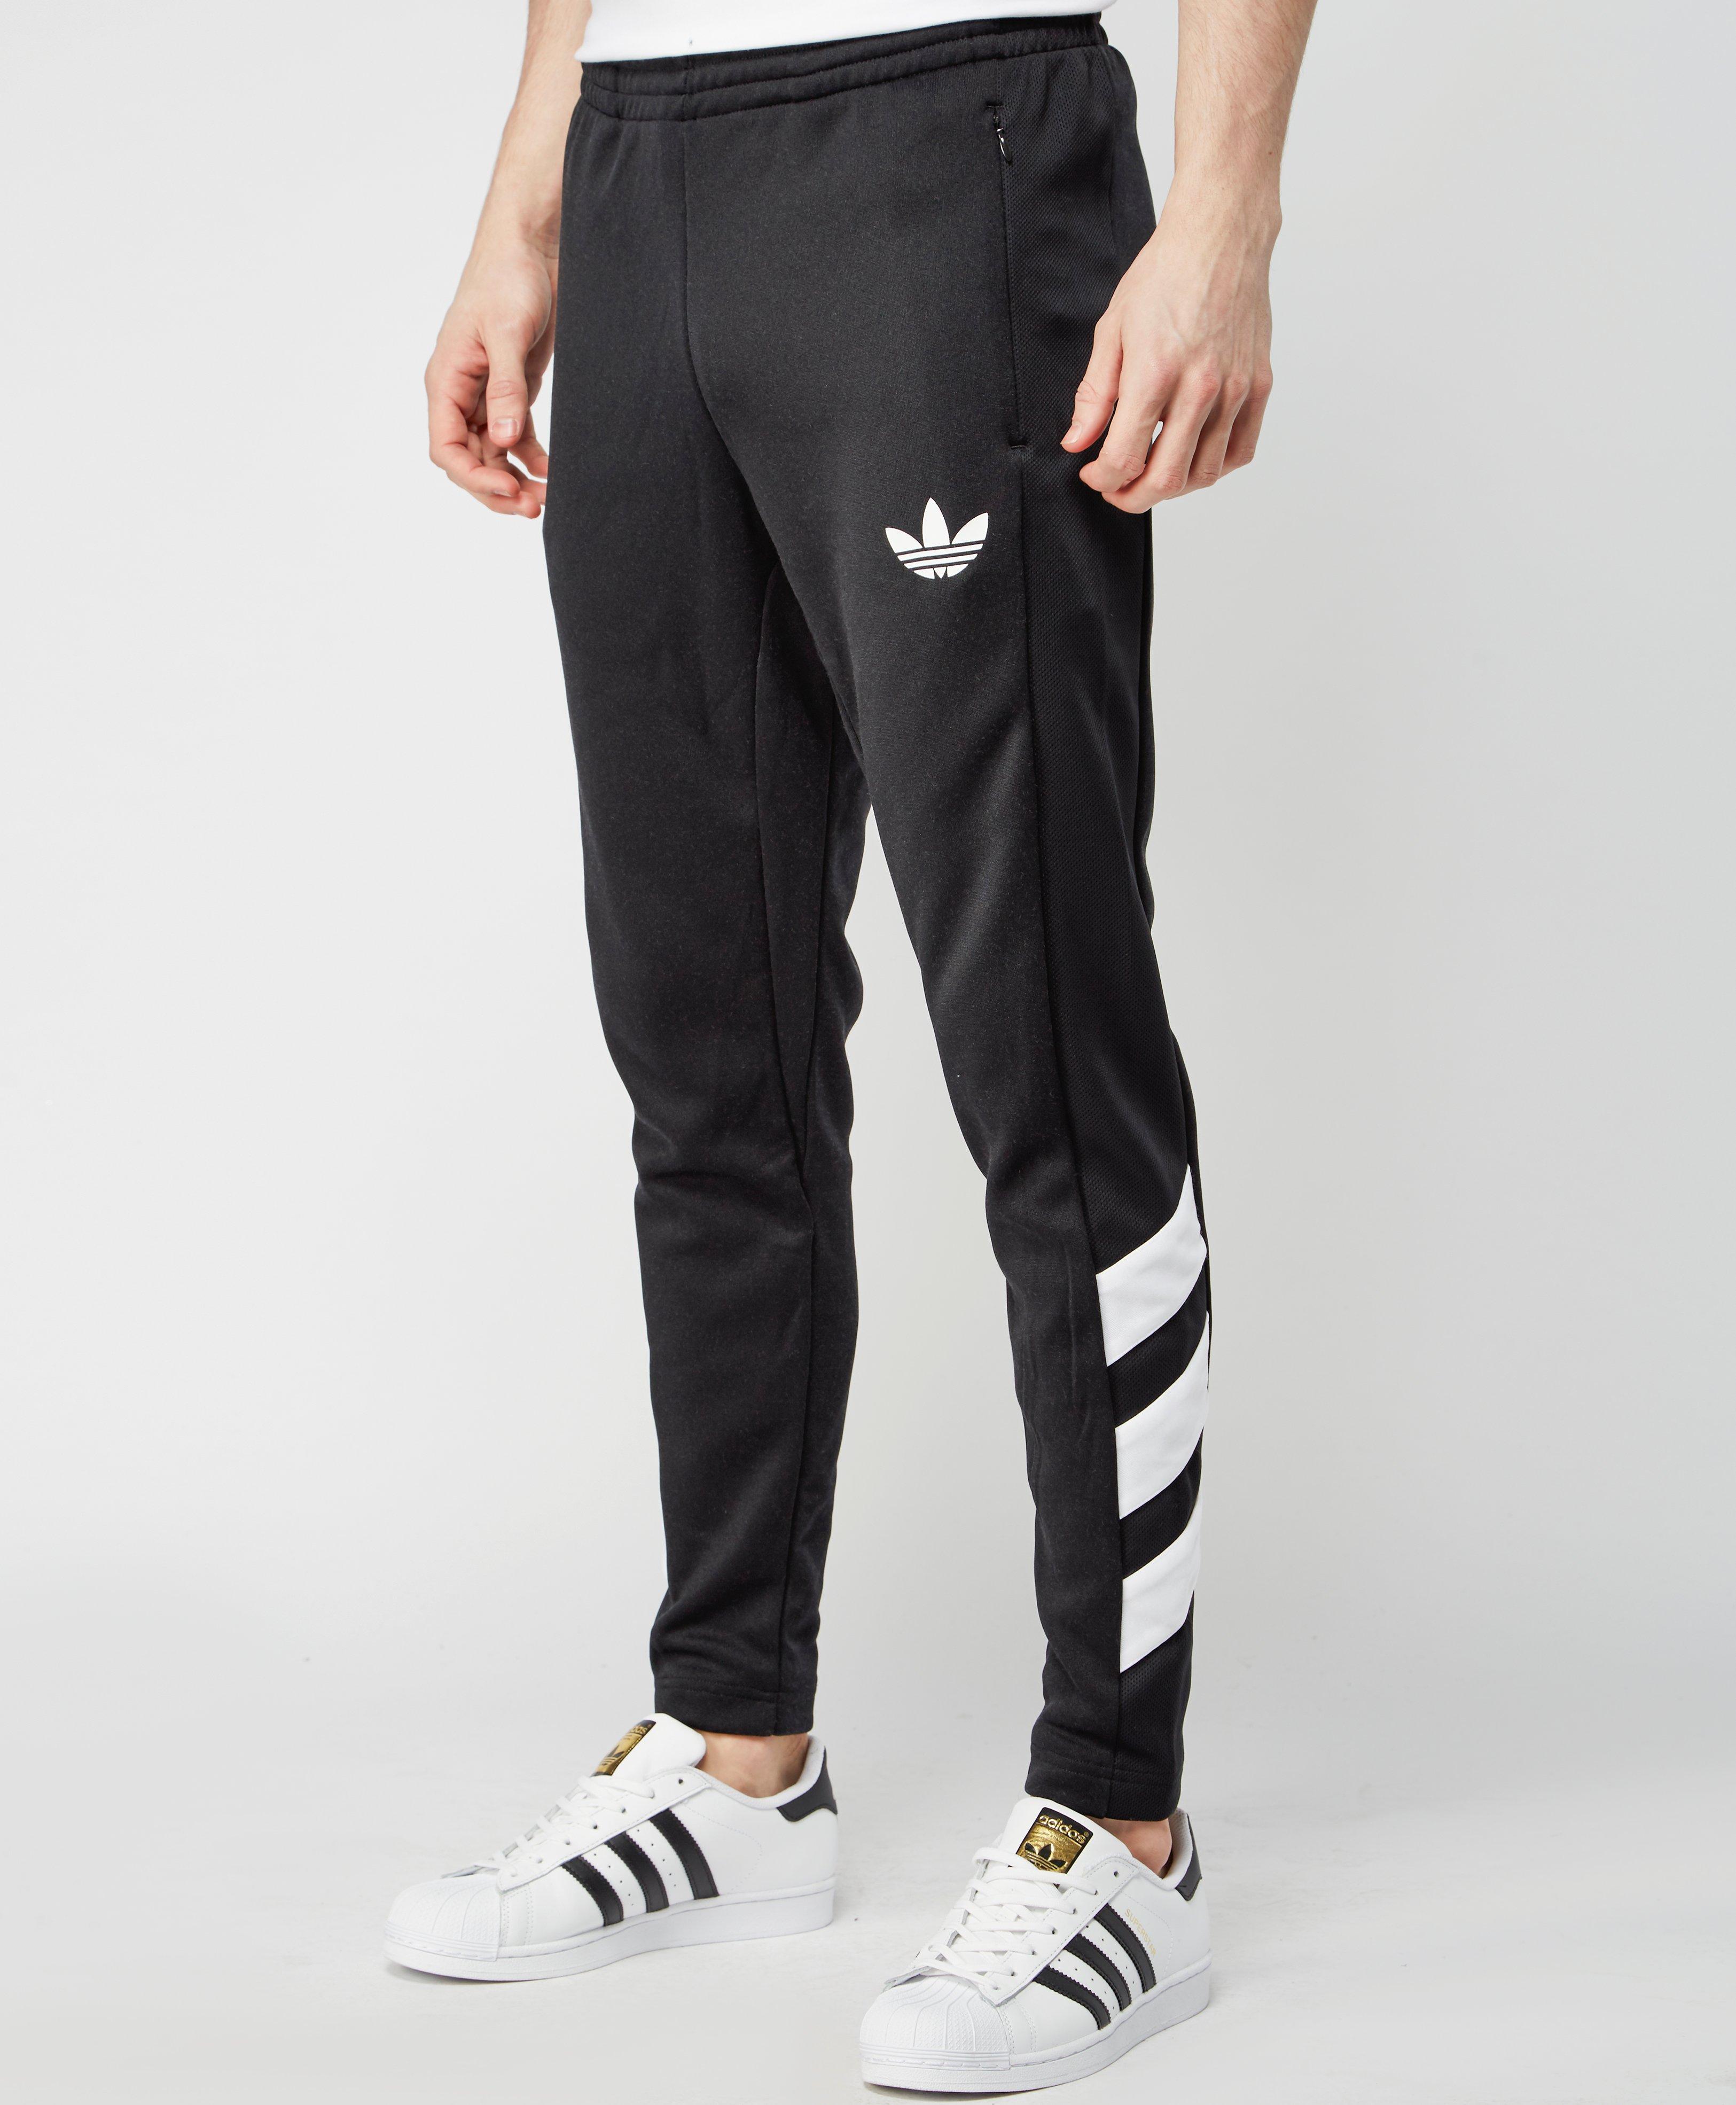 Lyst - Adidas Originals Trefoil Football Club Poly Pants in Black for Men